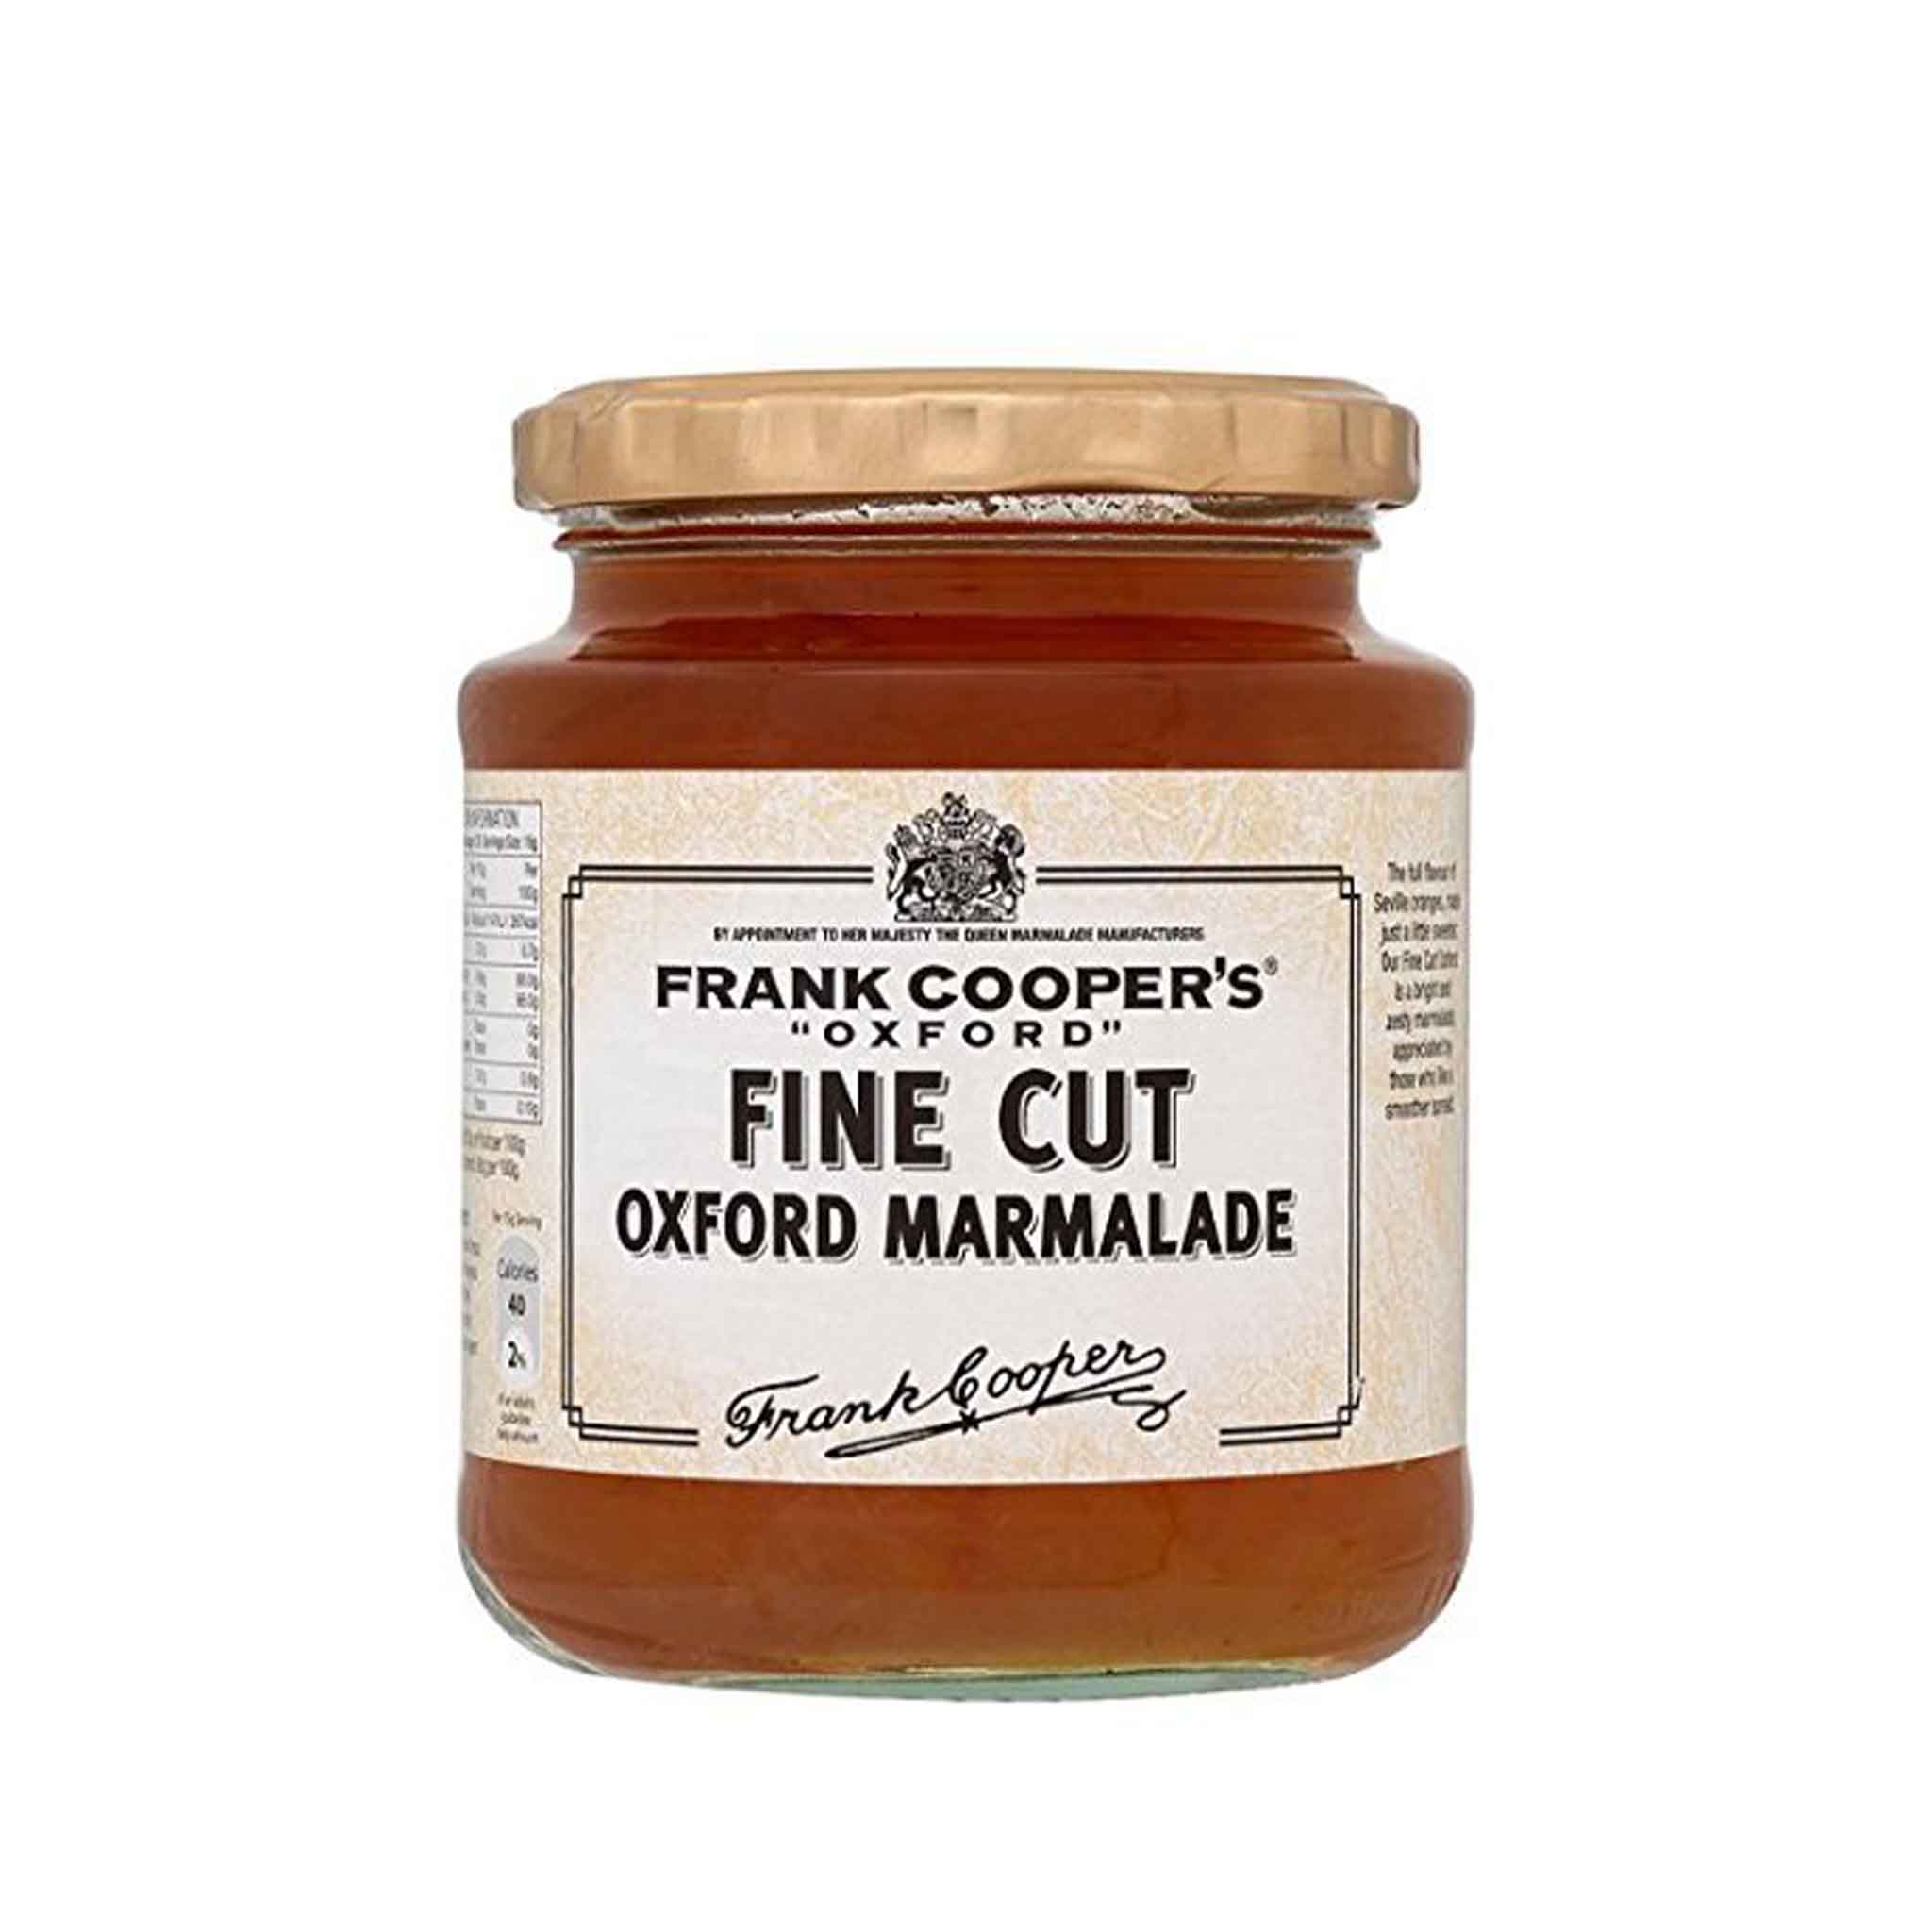 FRANK COOPER'S FINE CUT OXFORD MARMALADE 16oz